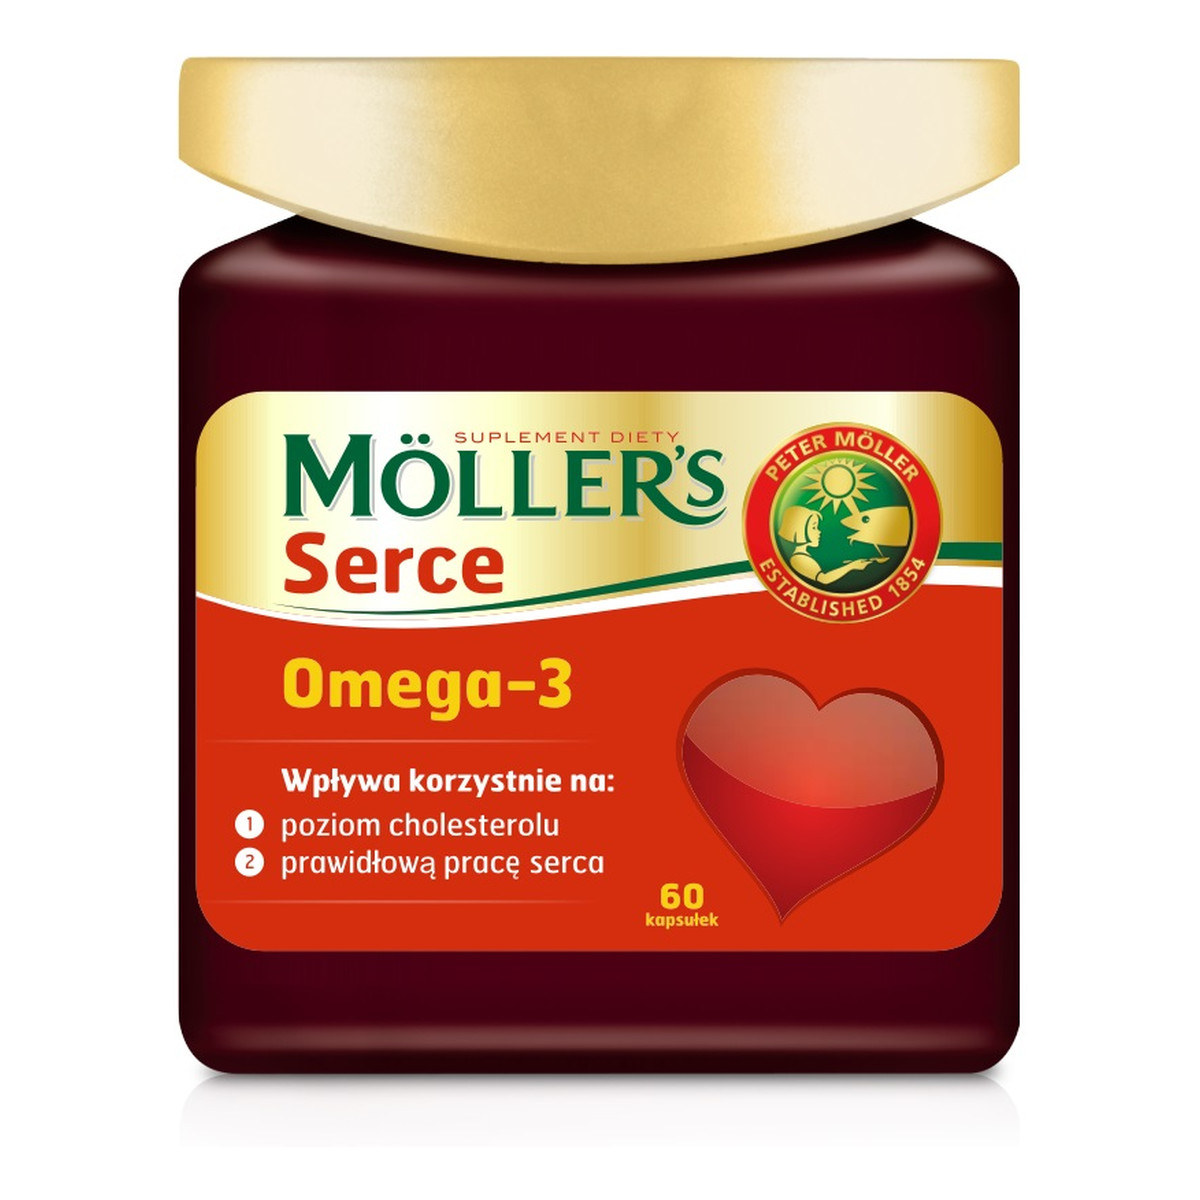 Moller's Serce omega-3 suplement diety 60 kapsułek